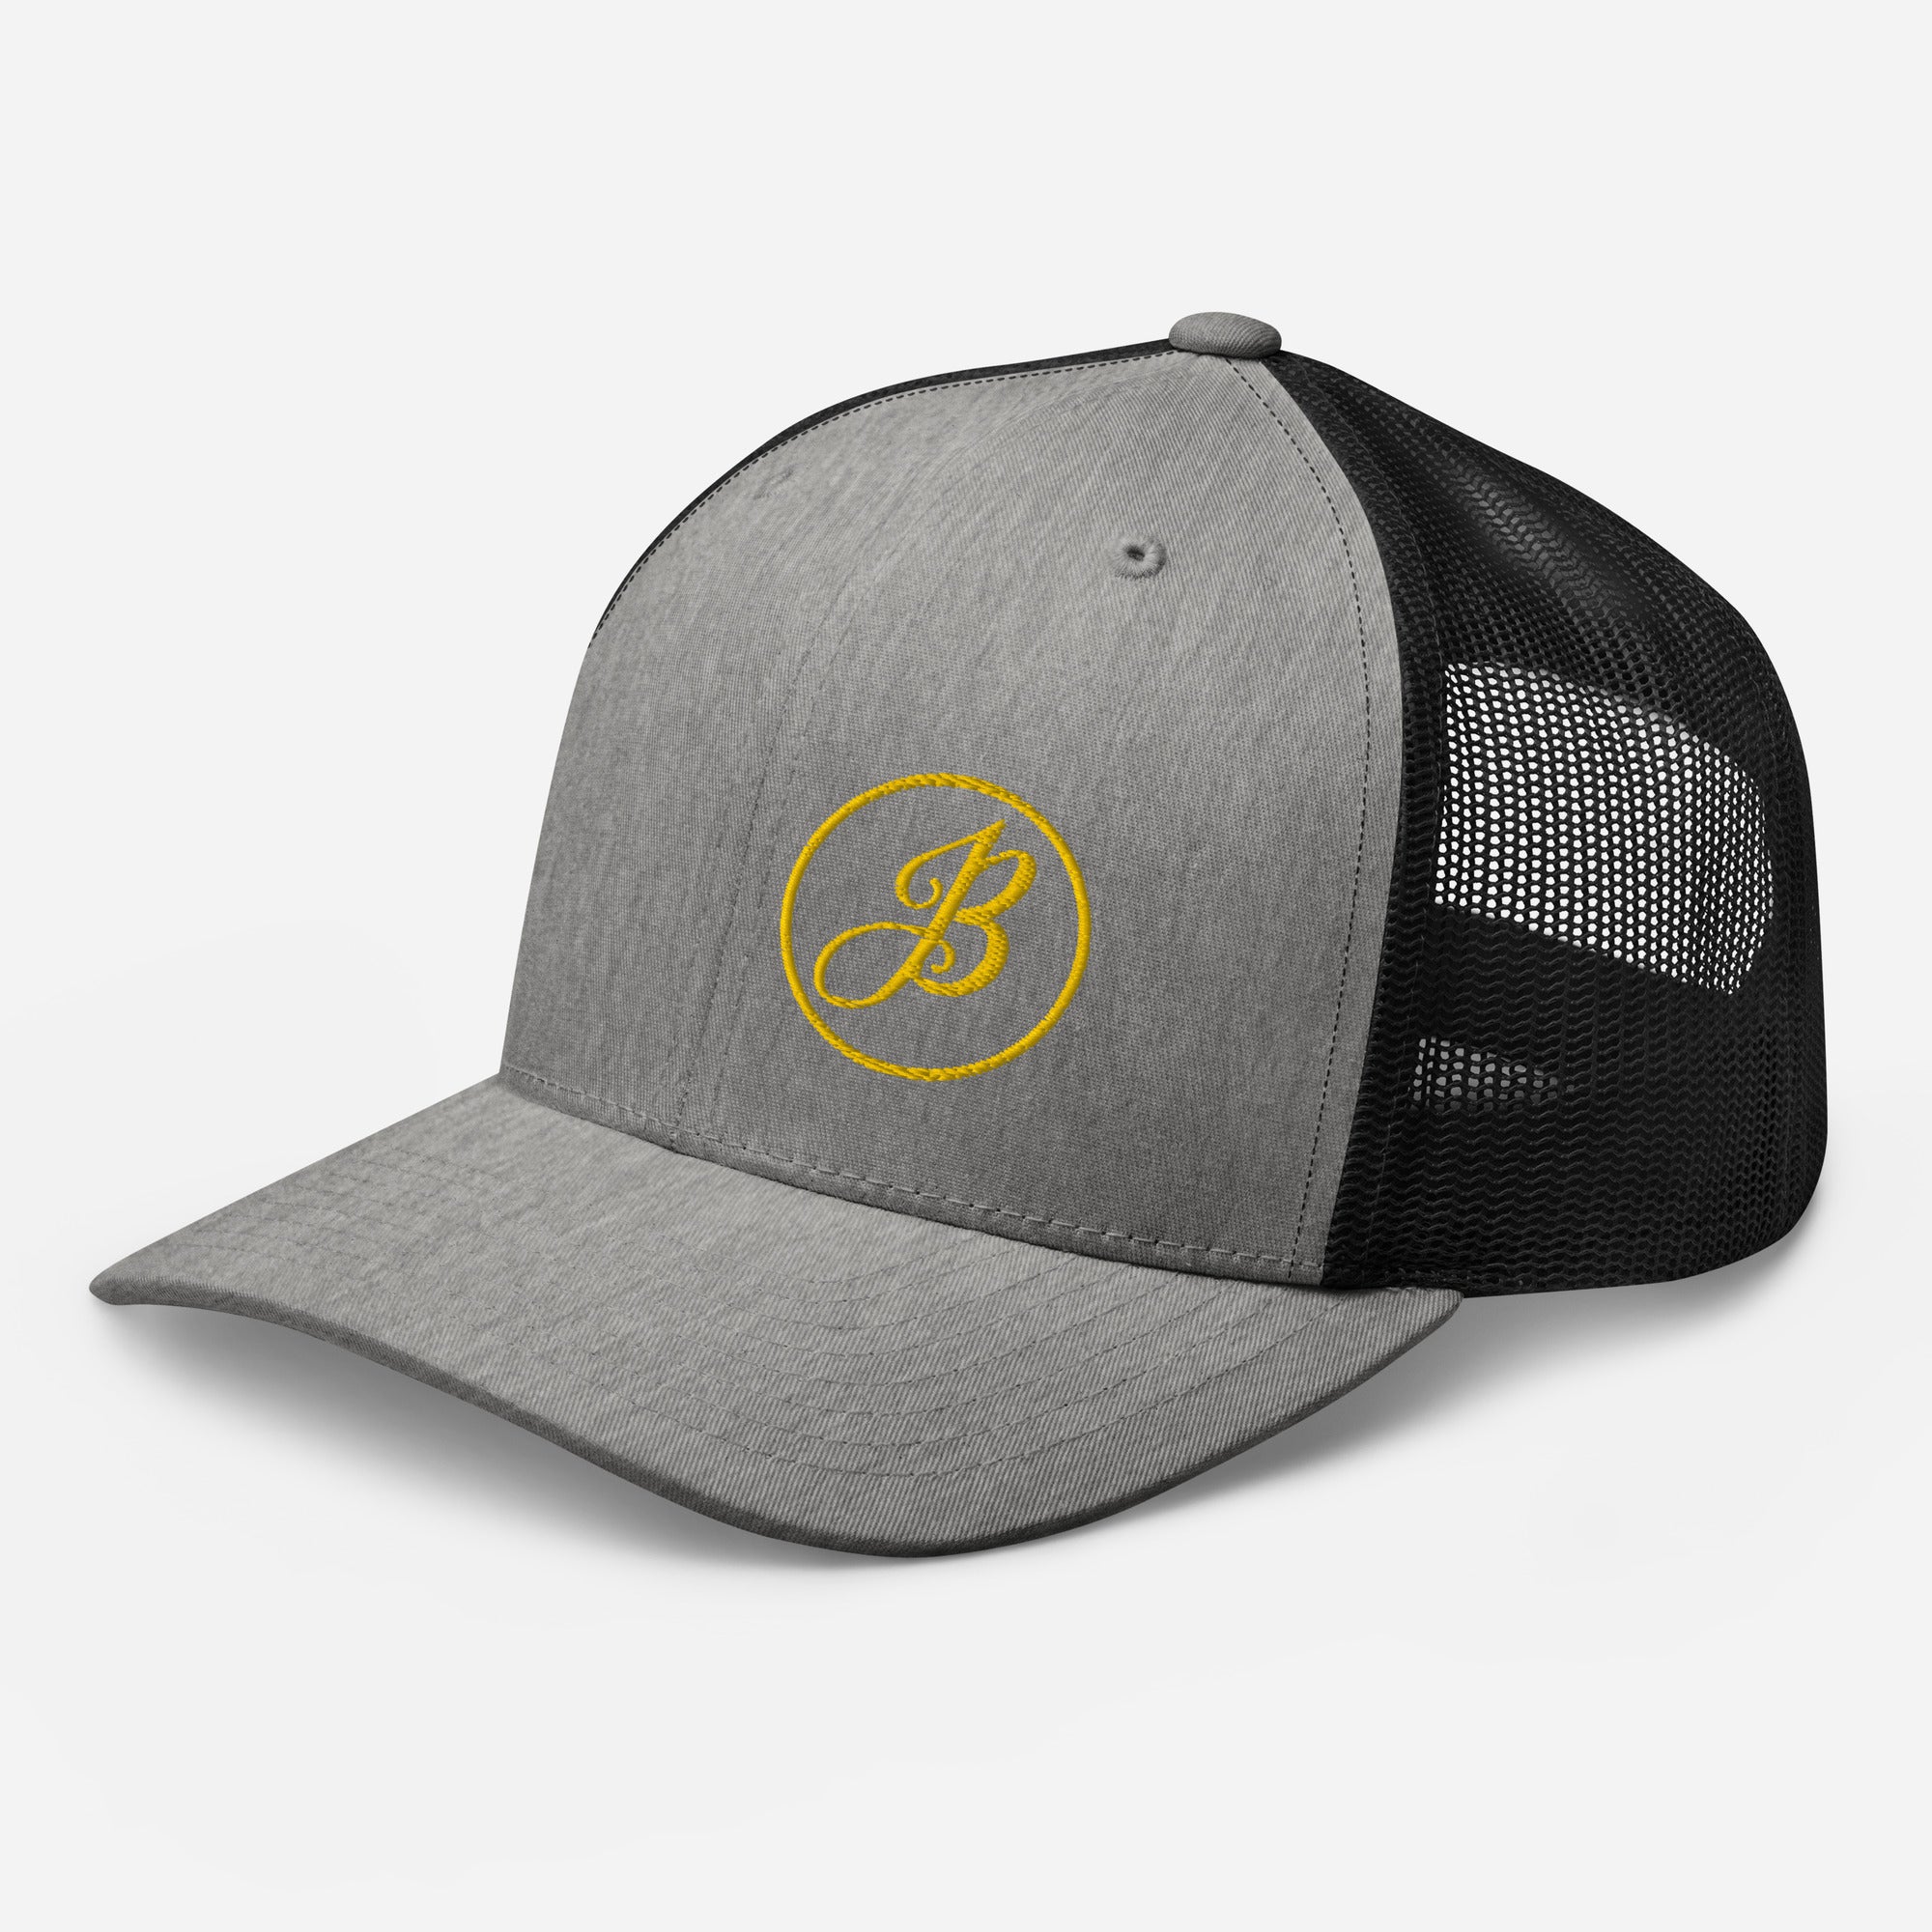 JB Gold Grey/Black Trucker Cap